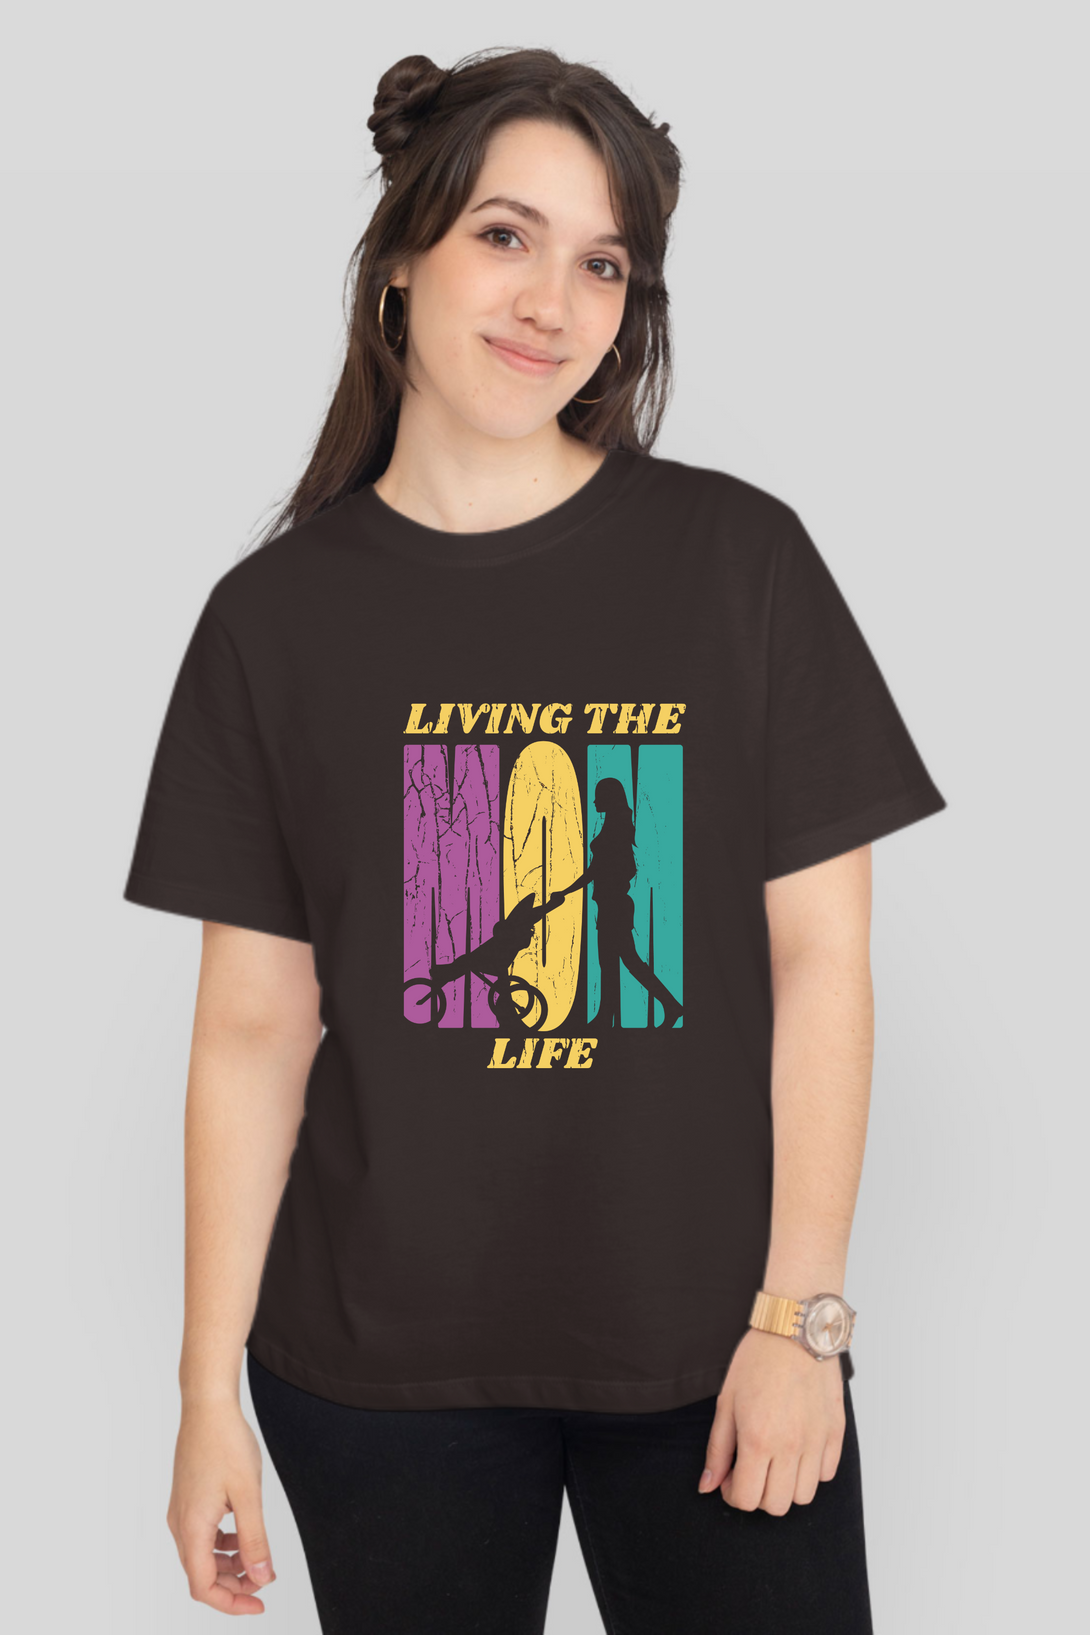 Mom Life Journey Printed T-Shirt For Women - WowWaves - 12